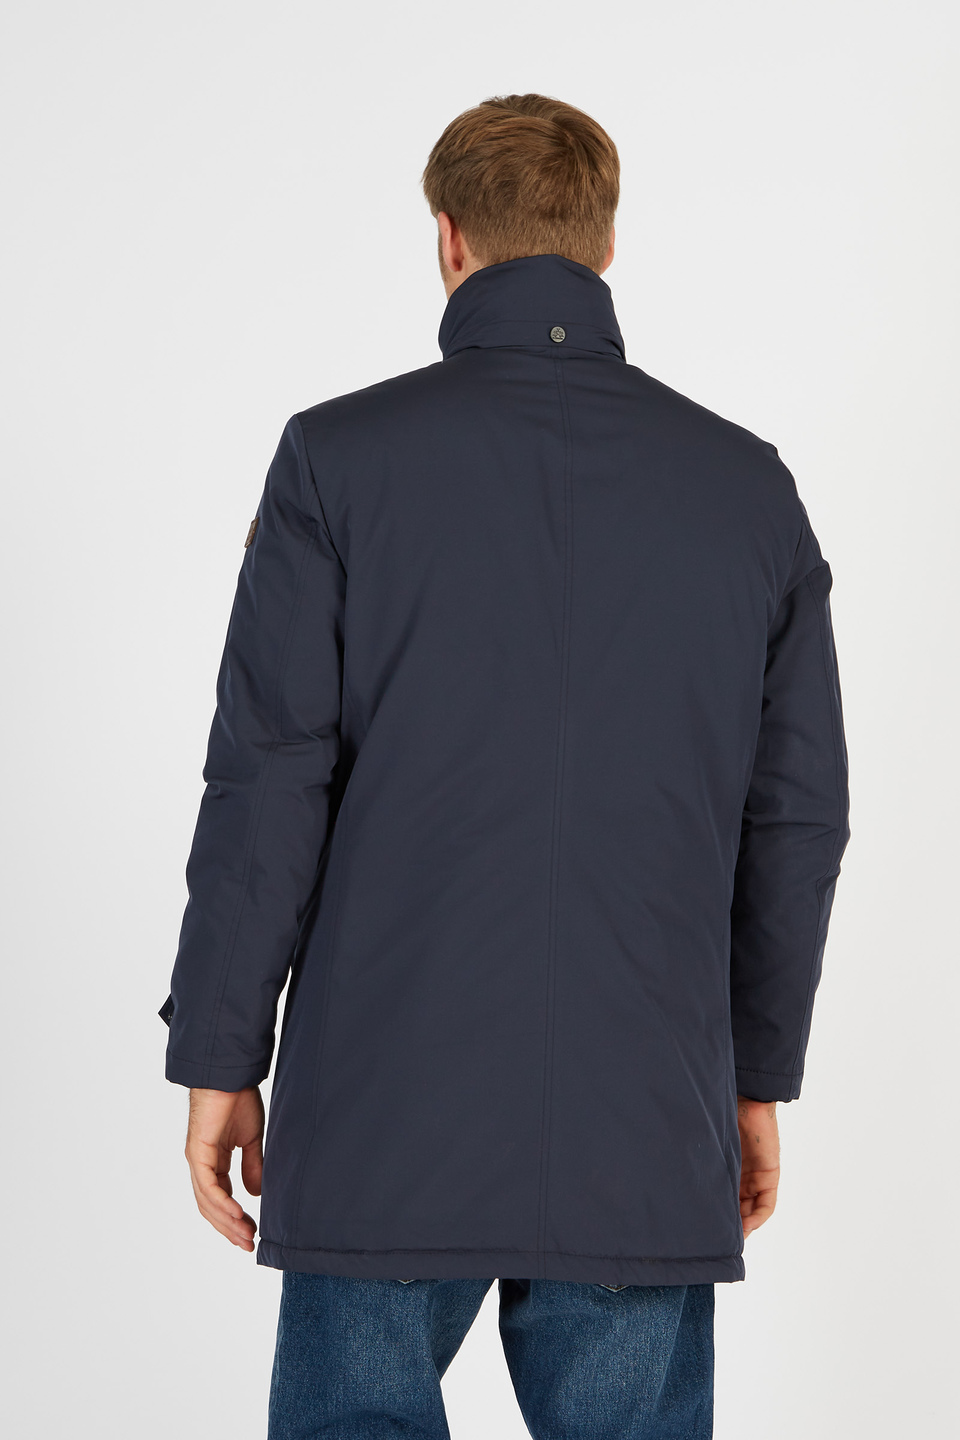 Men’s Blue Ribbon jacket in regular fit nylon | La Martina - Official Online Shop